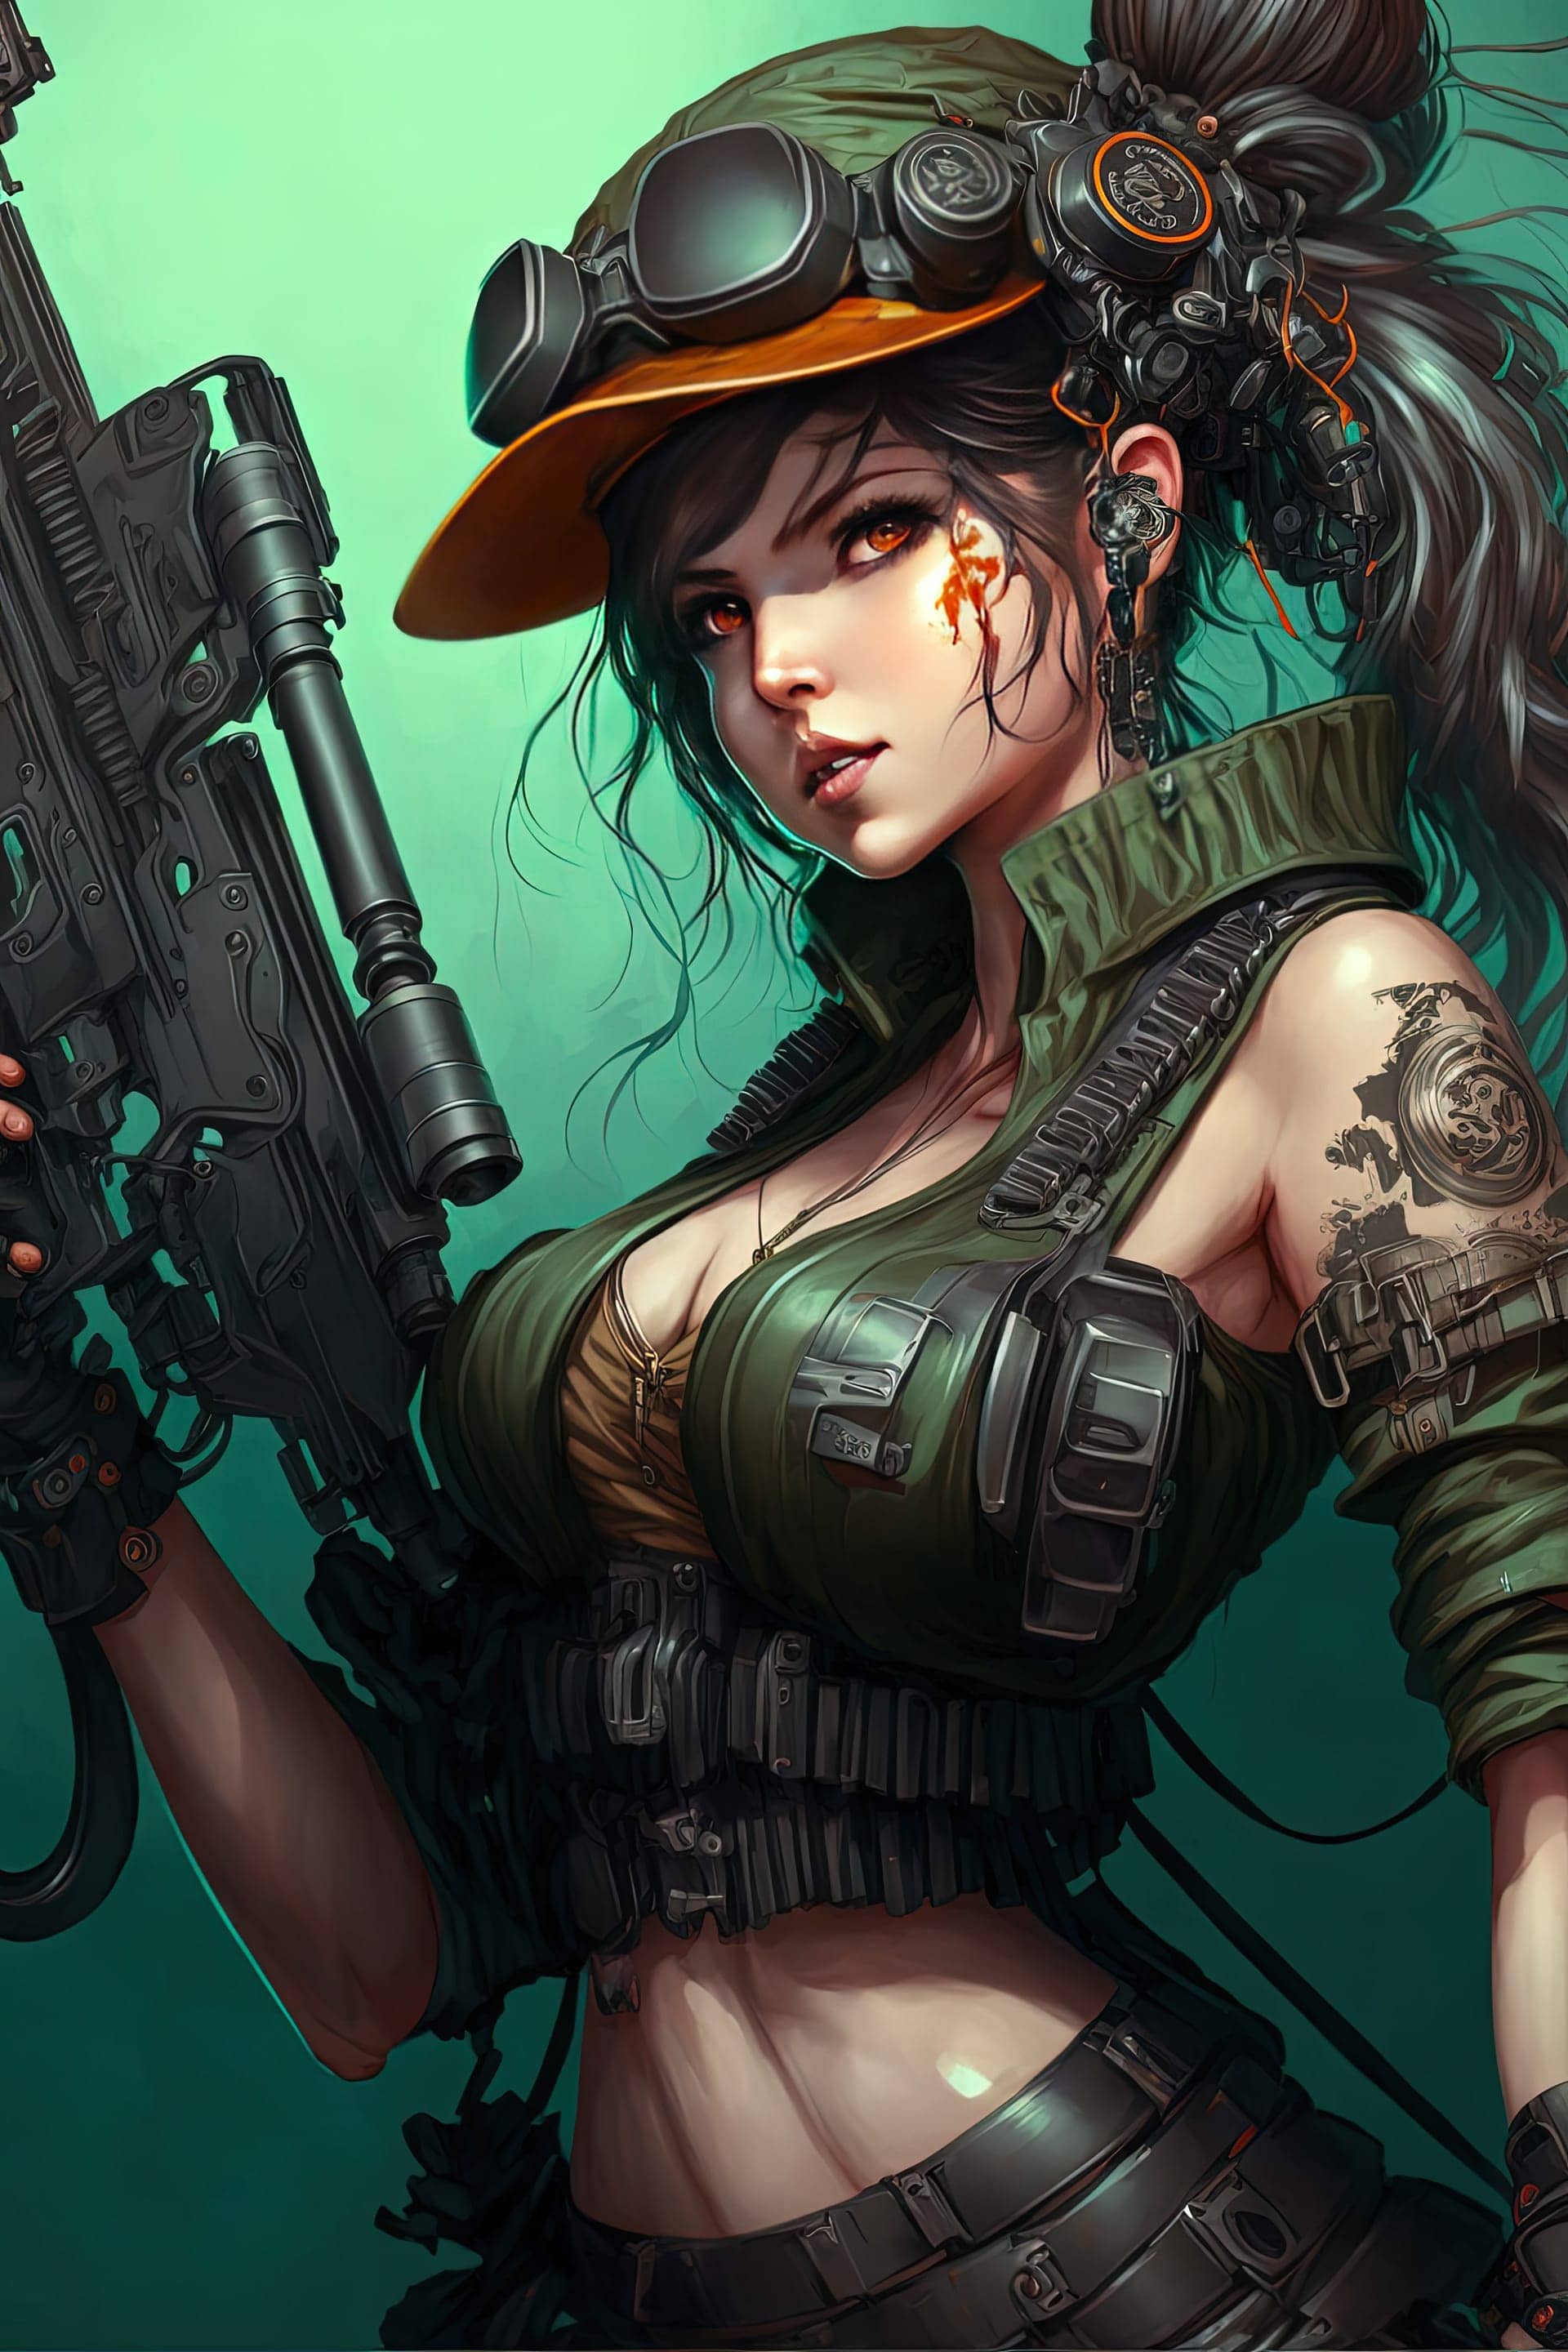 Beautiful woman cyberpunk space hunter with big gun army gear